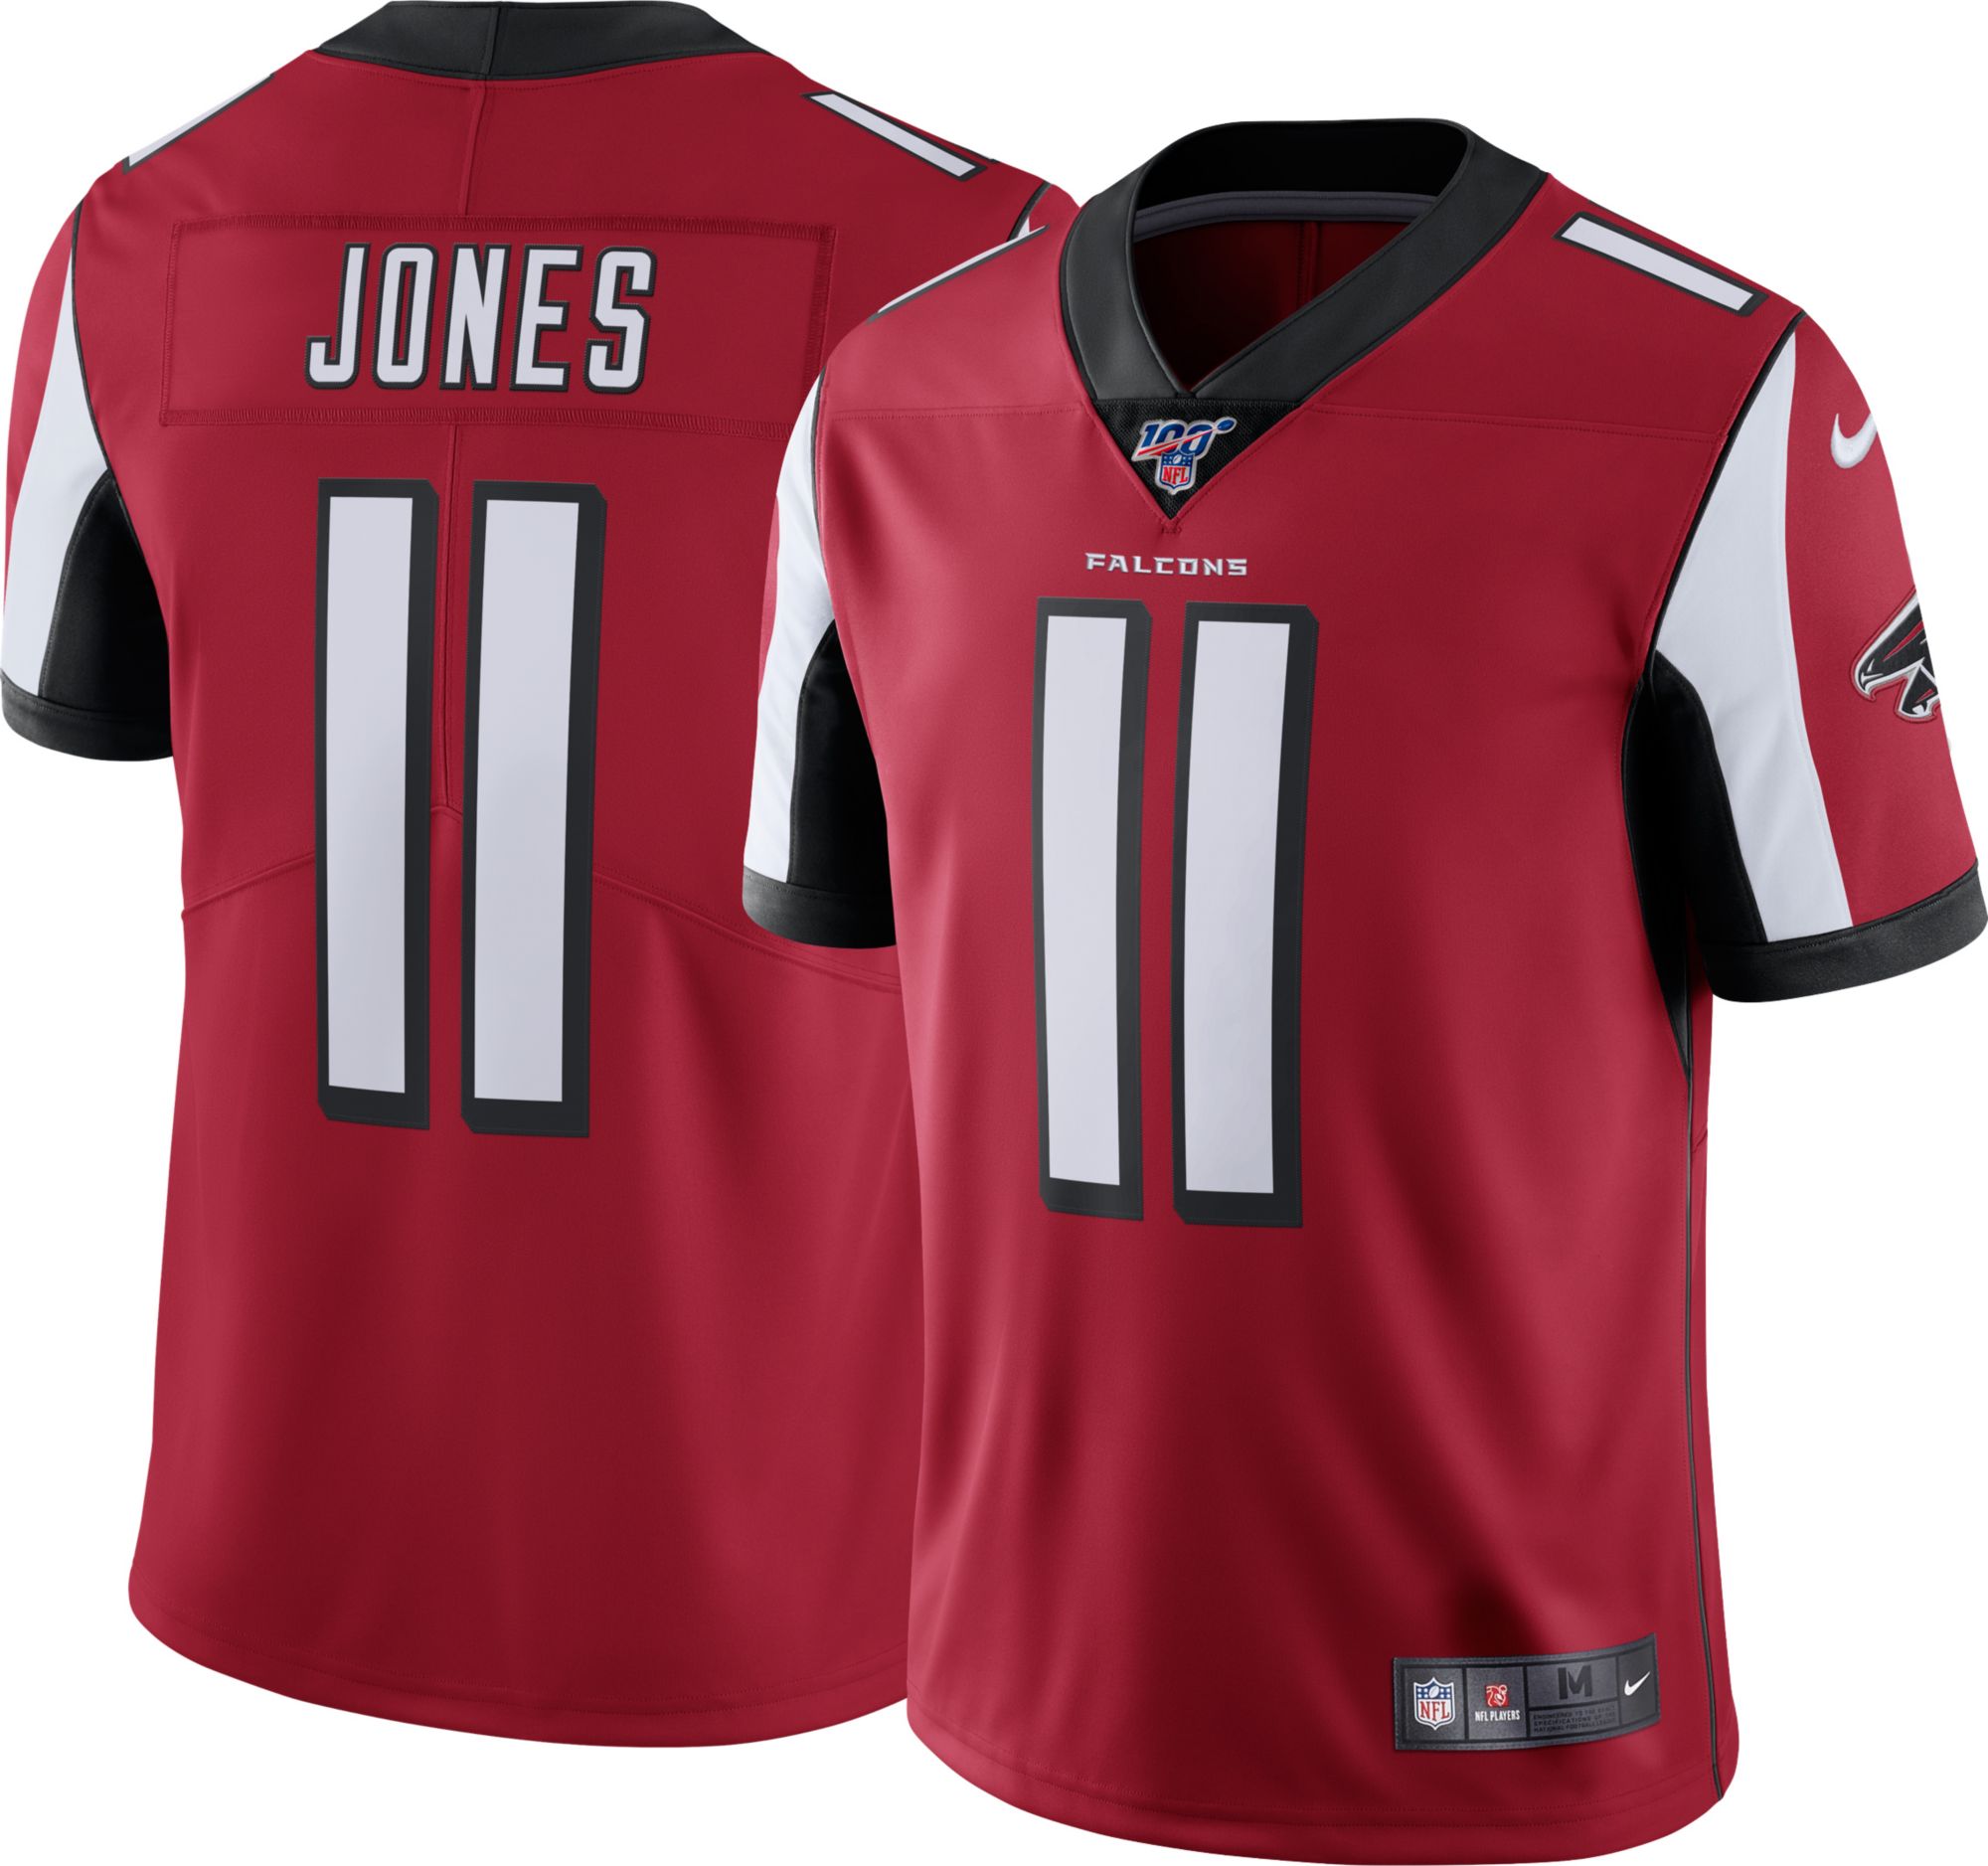 Atlanta Falcons Apparel & Gear | NFL Fan Shop at DICK'S